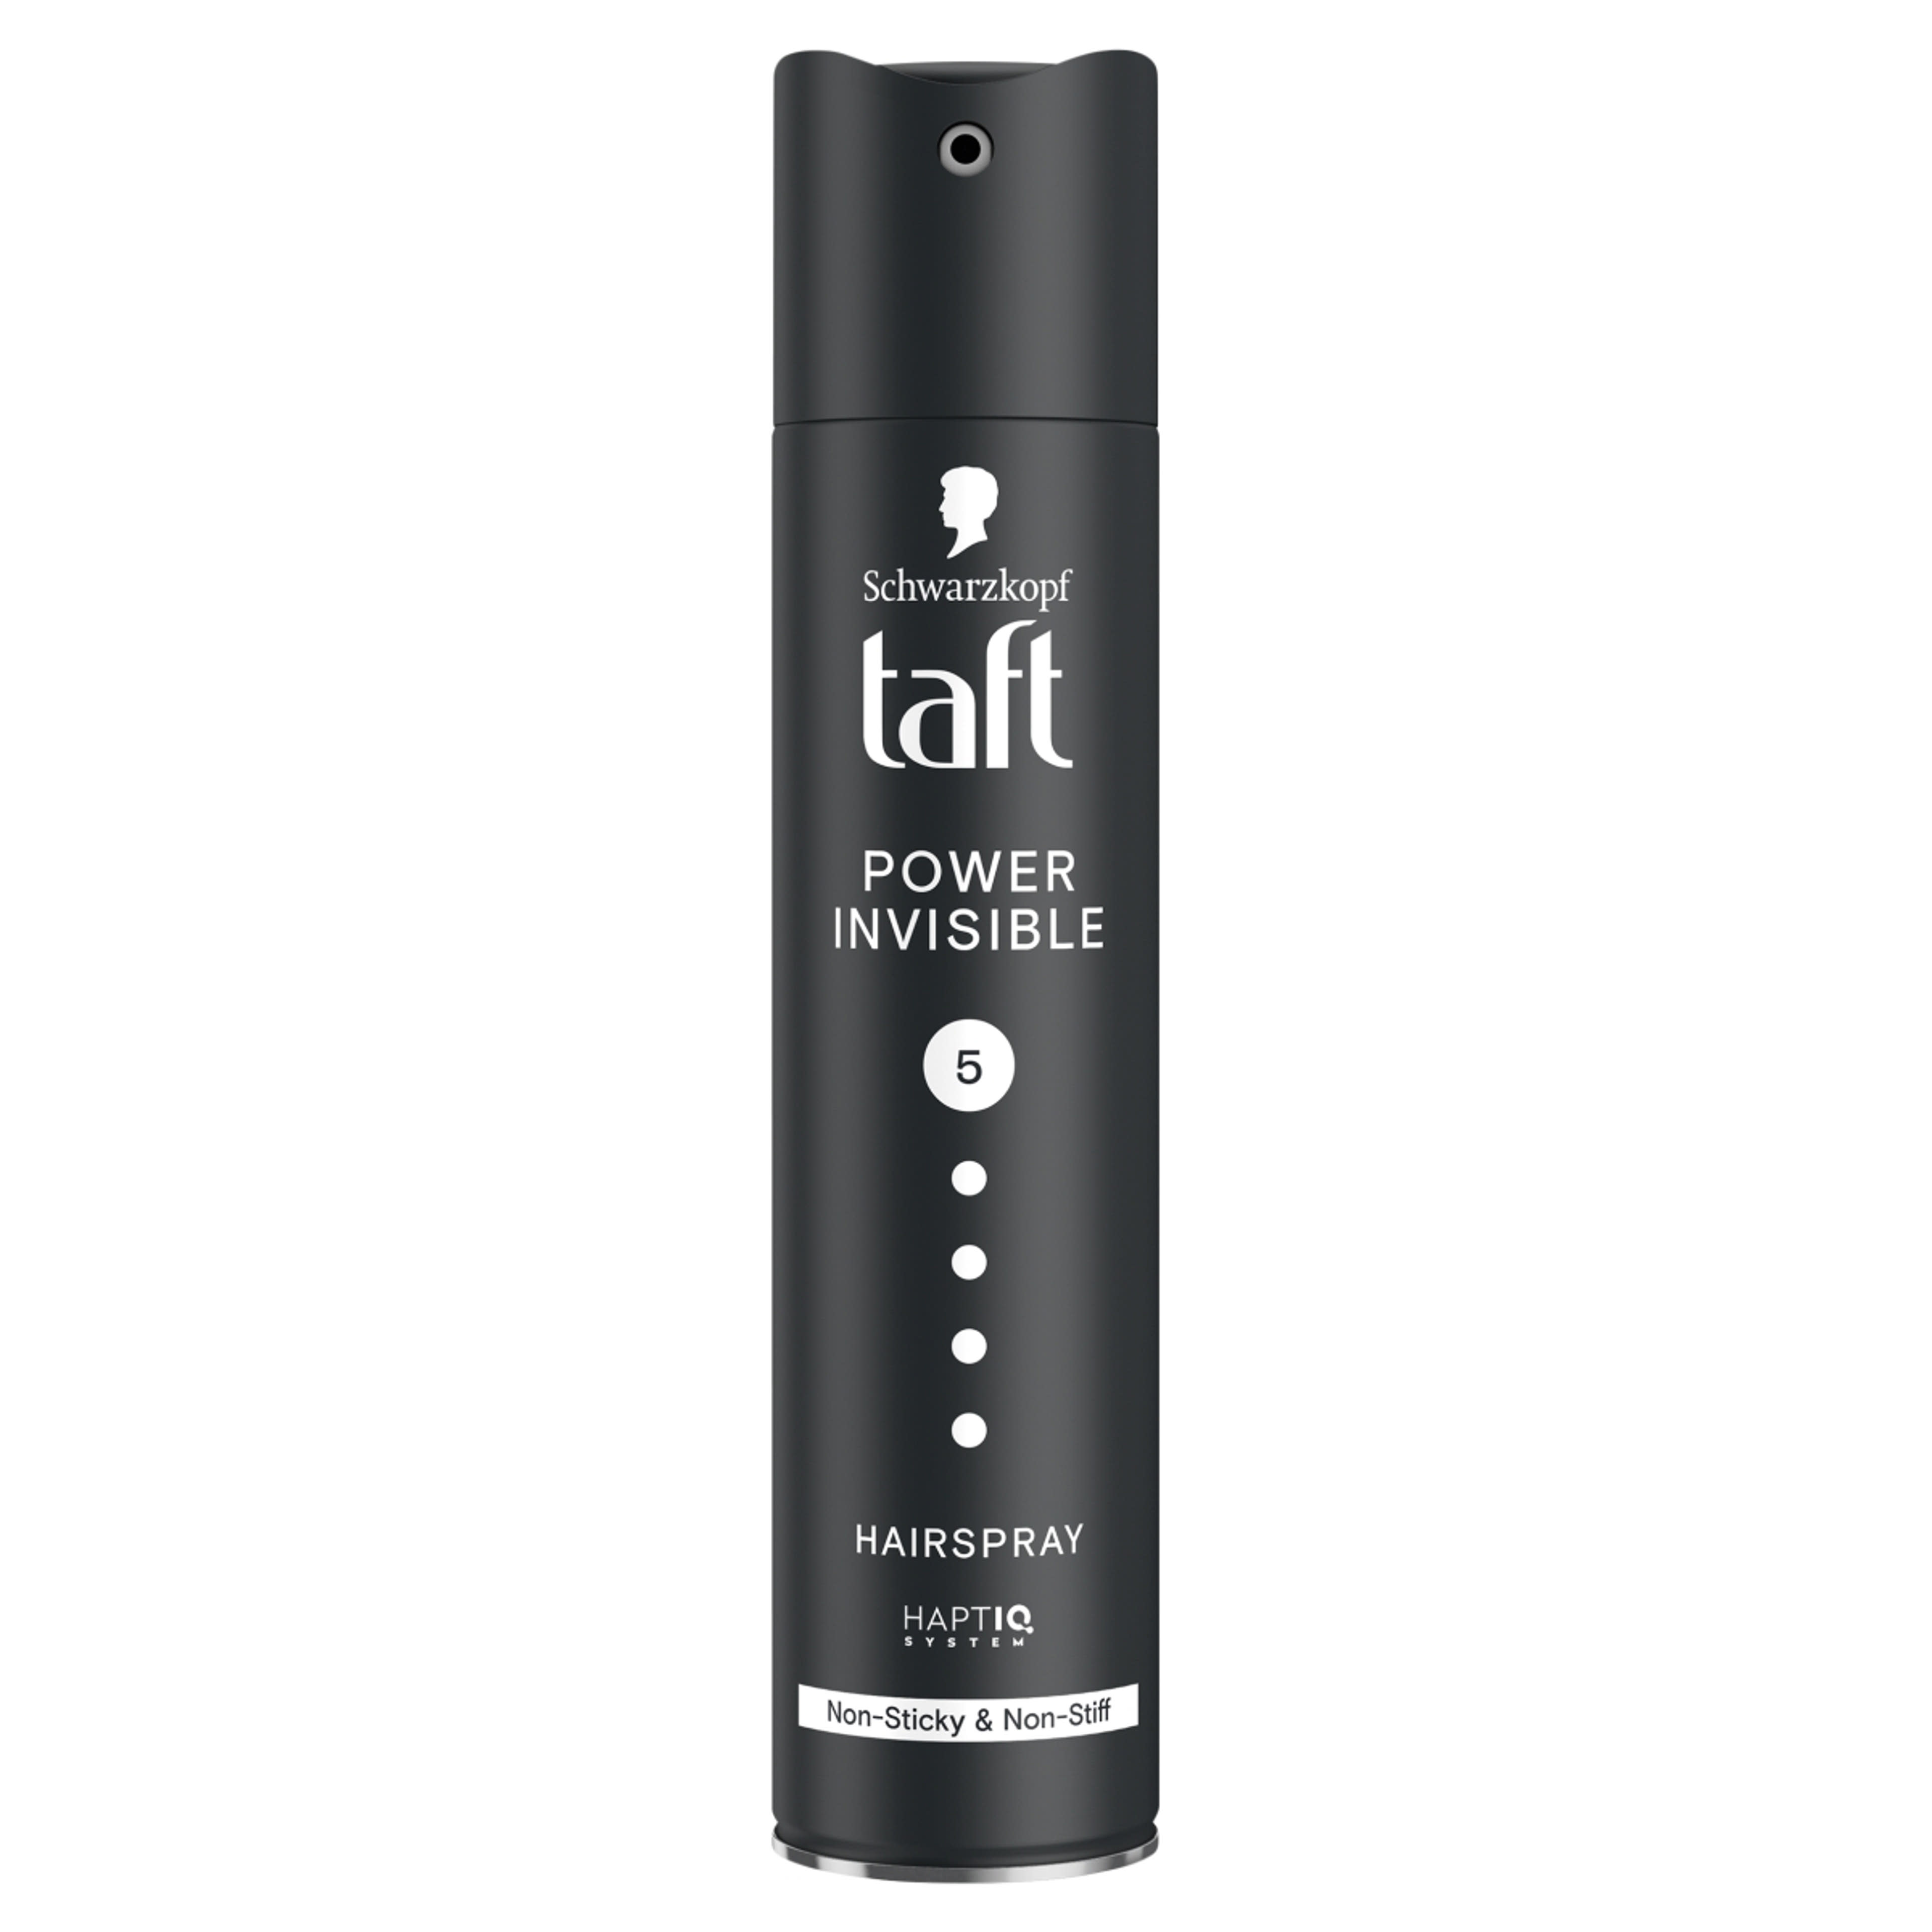 Taft Power Invisible hajlakk - 250 ml